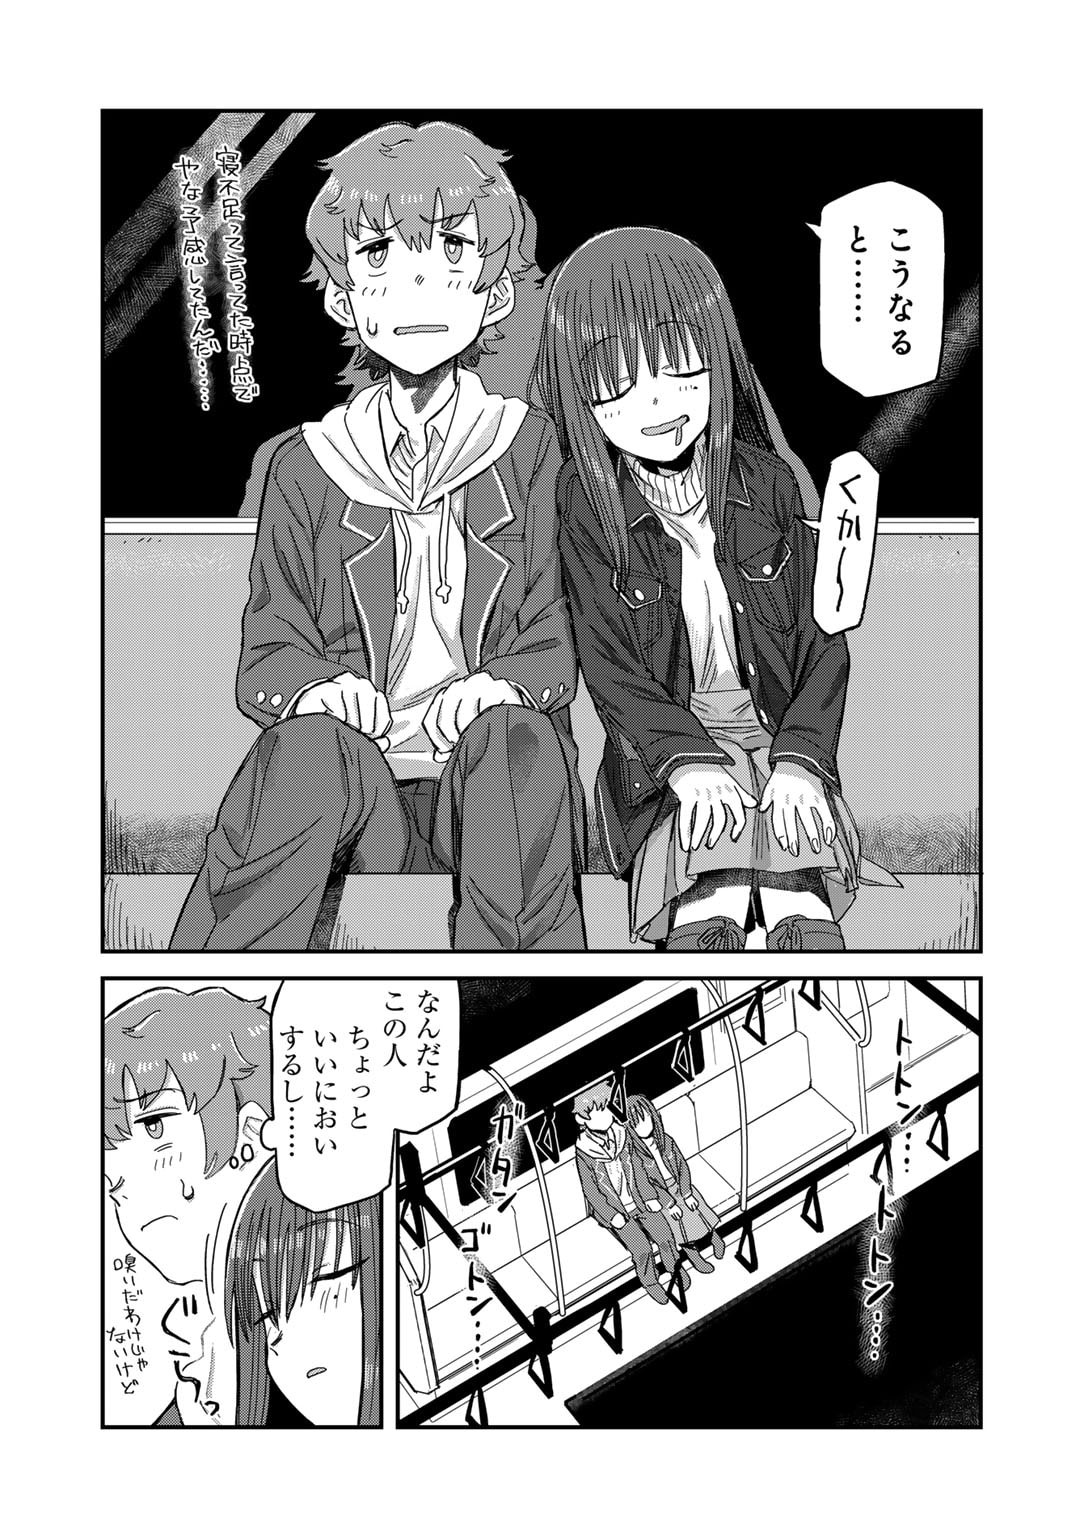 Kurono-san wa Occult ga Suki! - Chapter 4 - Page 7